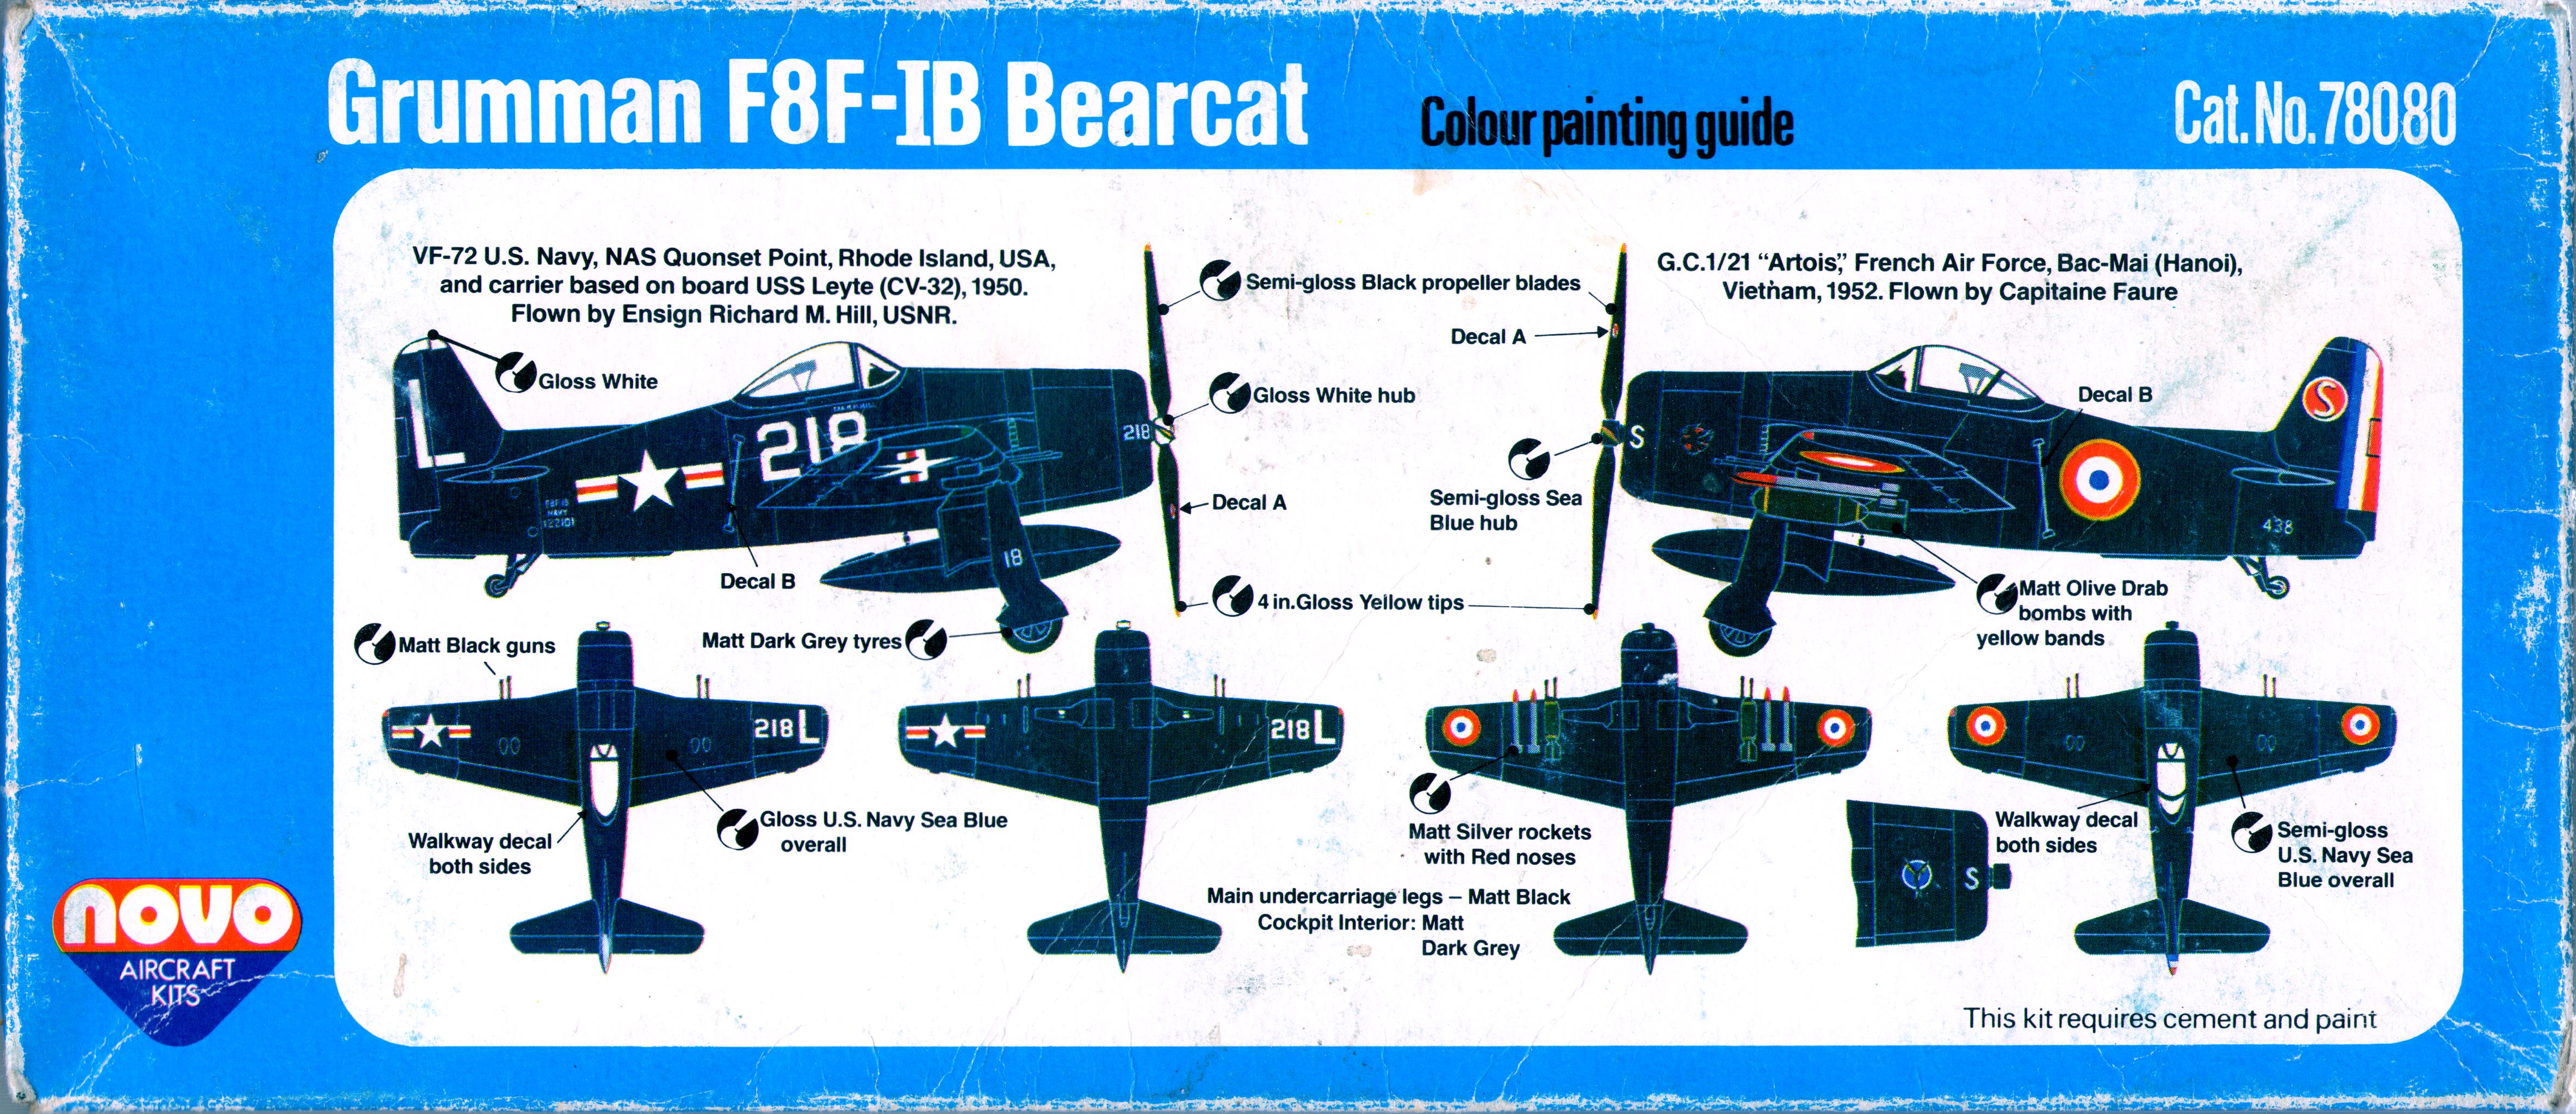 NOVO F407 Grumman F8F-1B Bearcat Cat.No.78080, NOVO Toys Ltd, 1979 схемы окраски